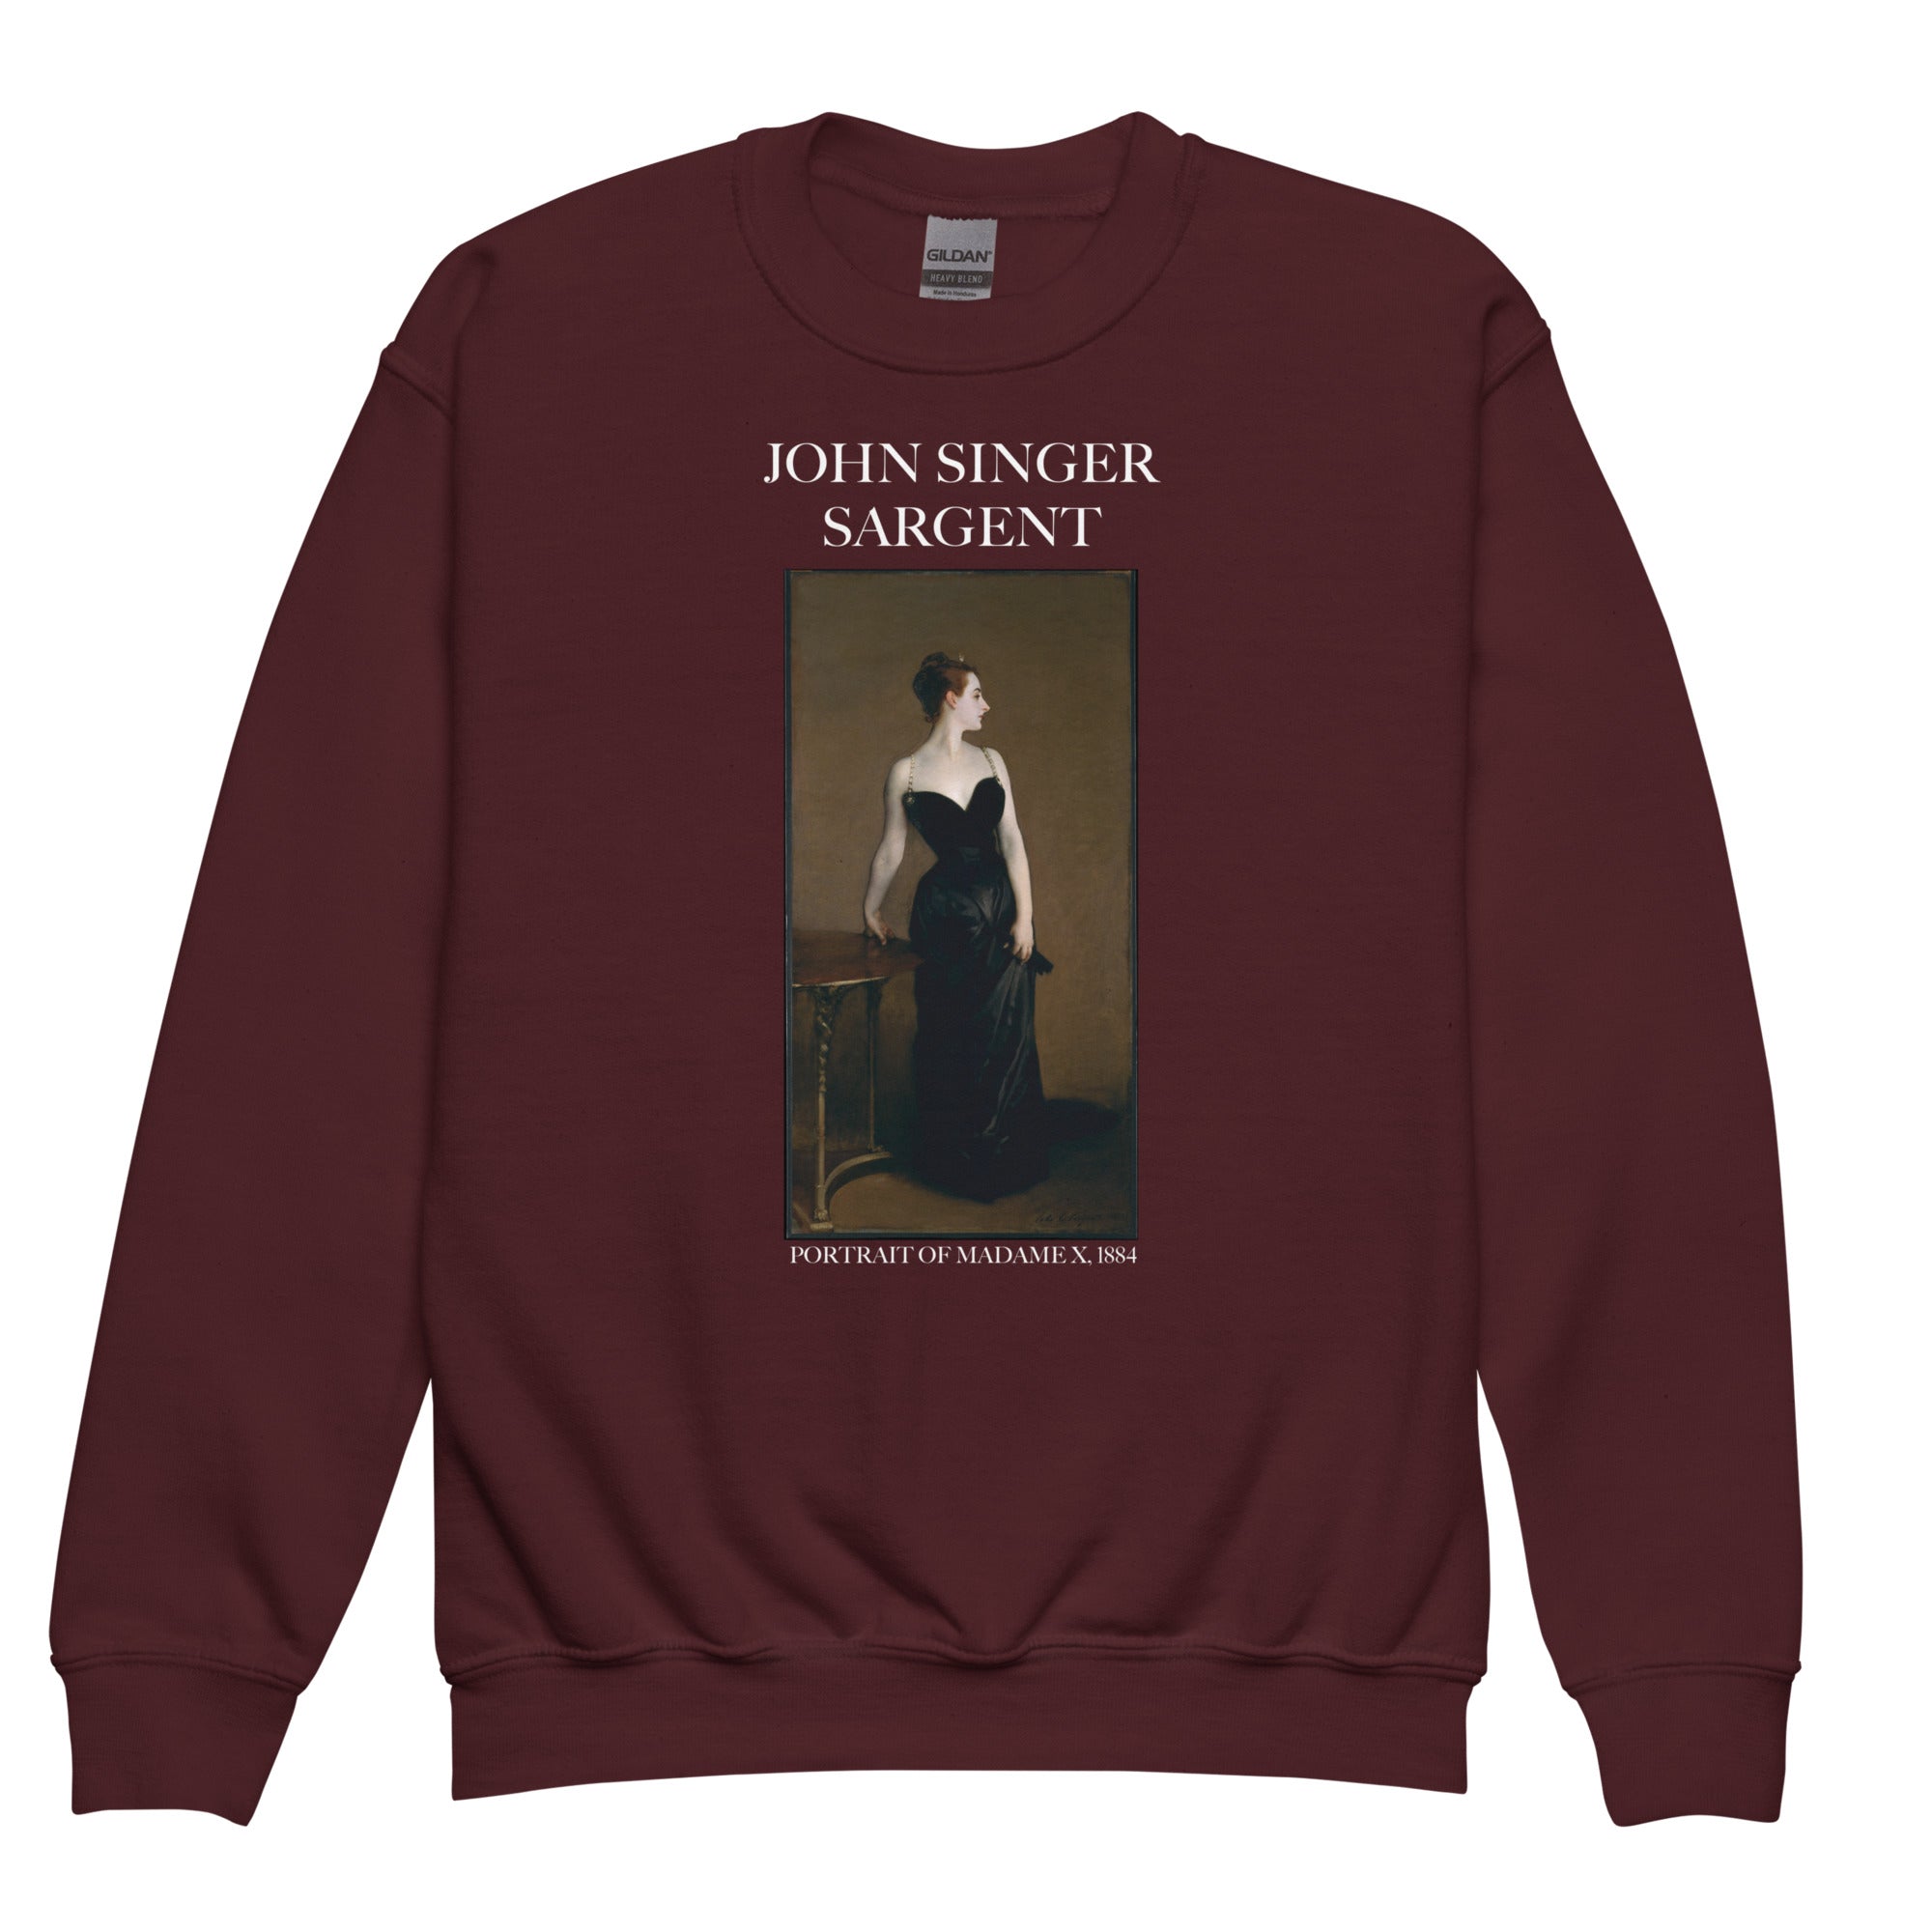 John Singer Sargent 'Portrait of Madame X' Famous Painting Crewneck Sweatshirt | Premium Youth Art Sweatshirt